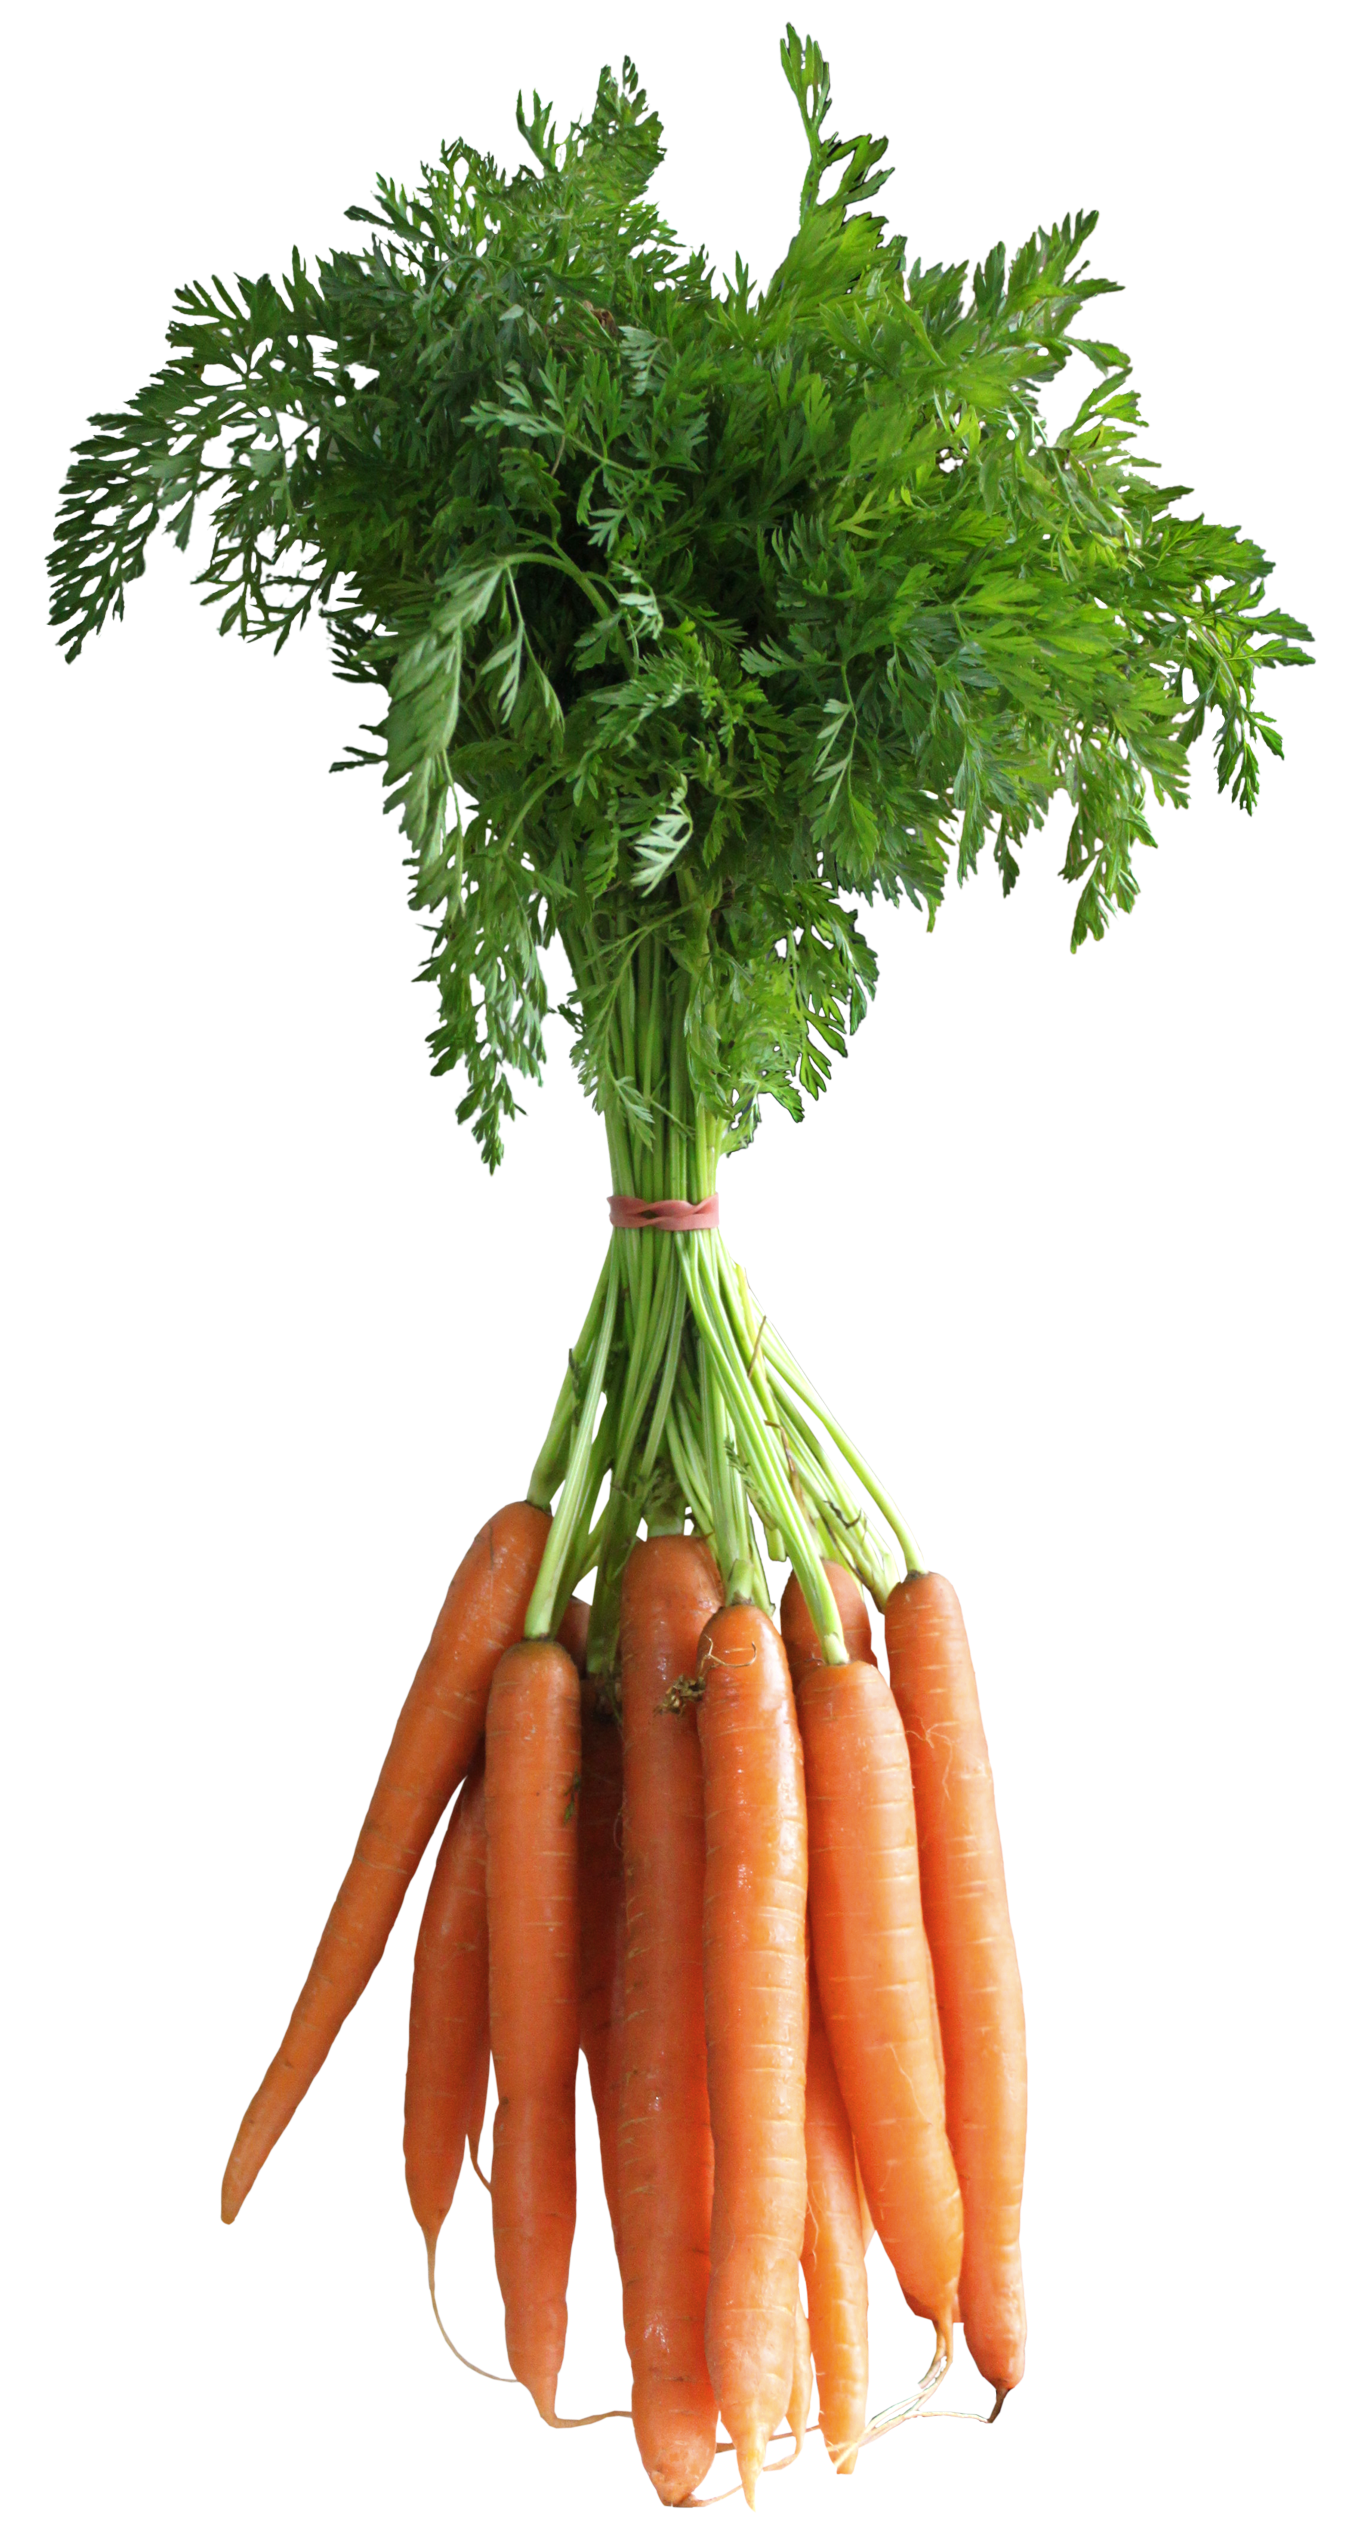 bush of carrots